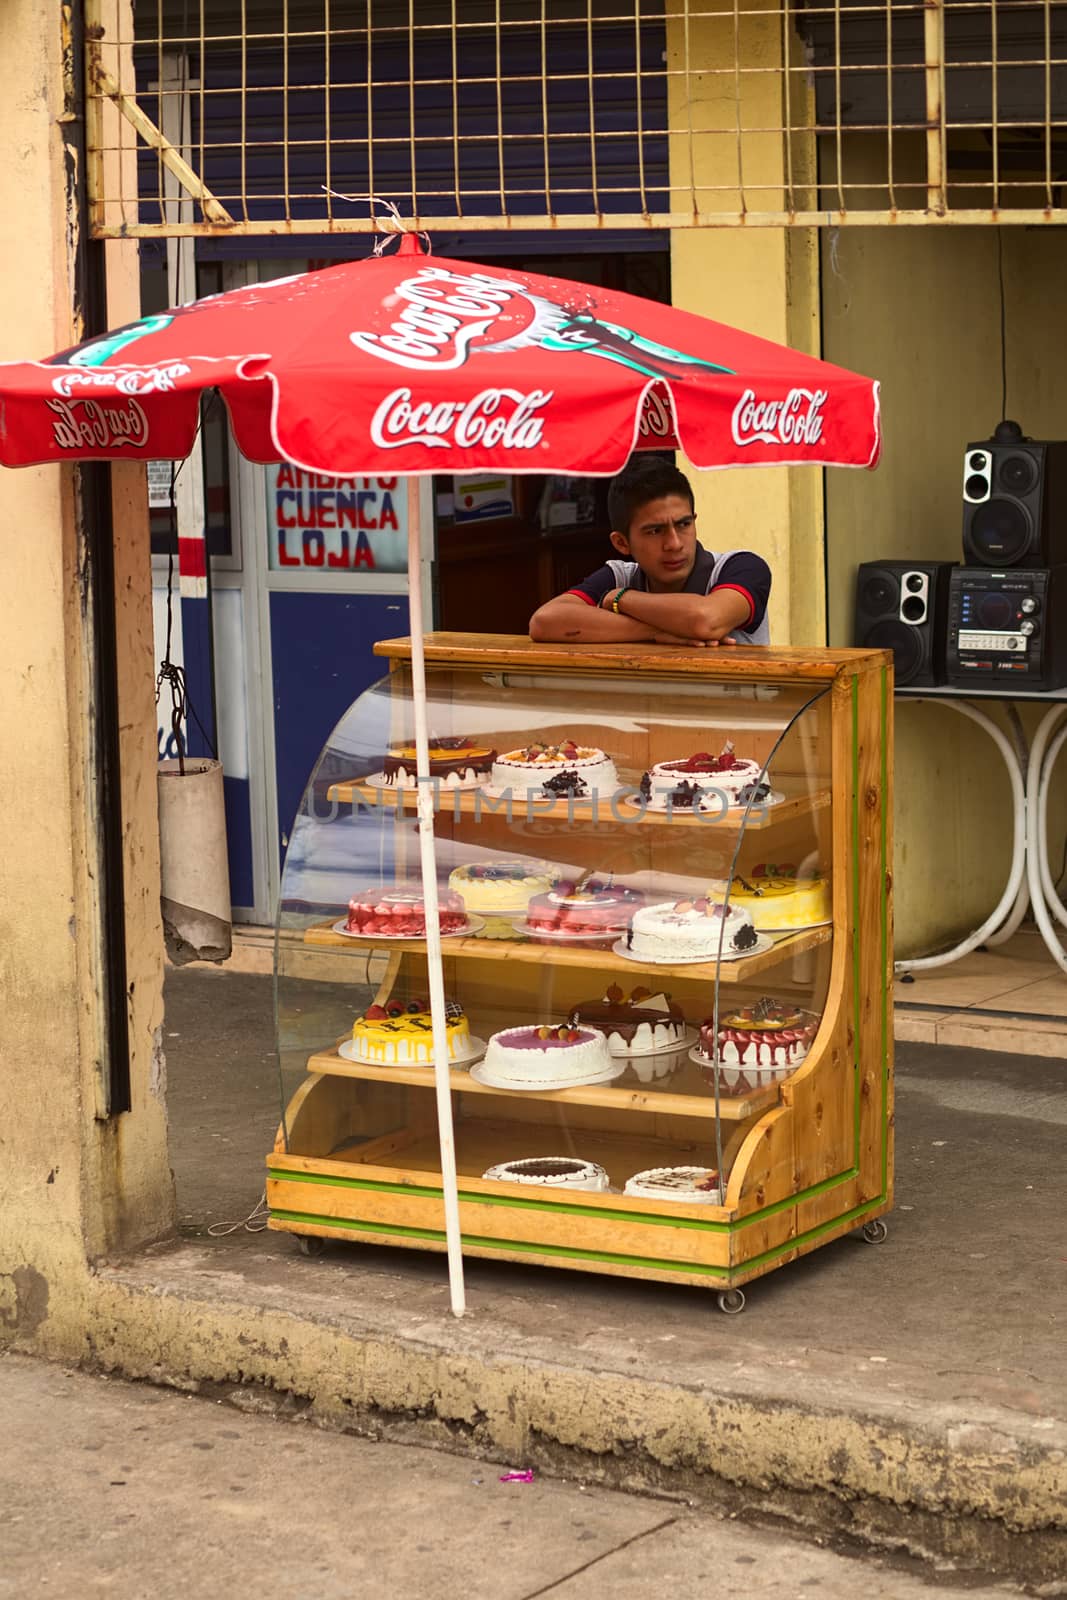 Cakes for Sale in Ambato, Ecuador by sven